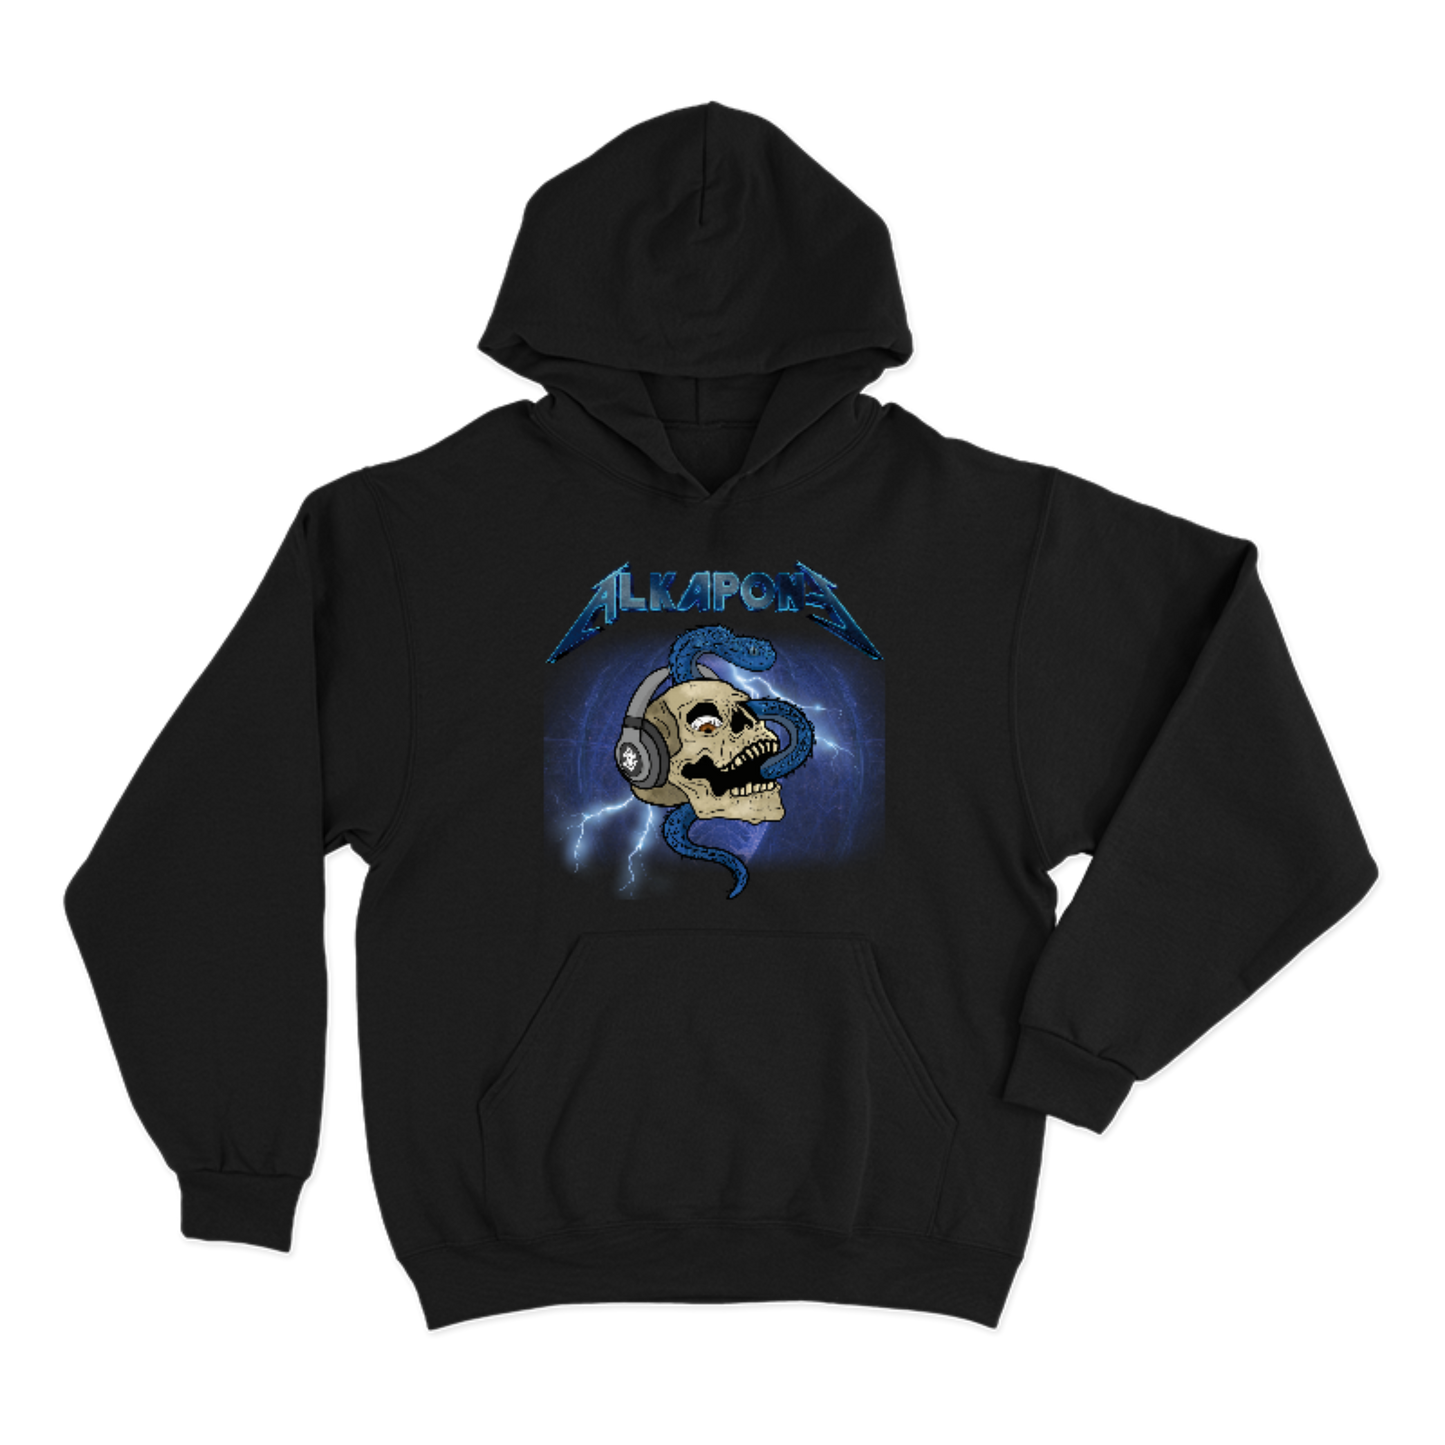 Metallic alkapone hoodie lightning bolt with skull